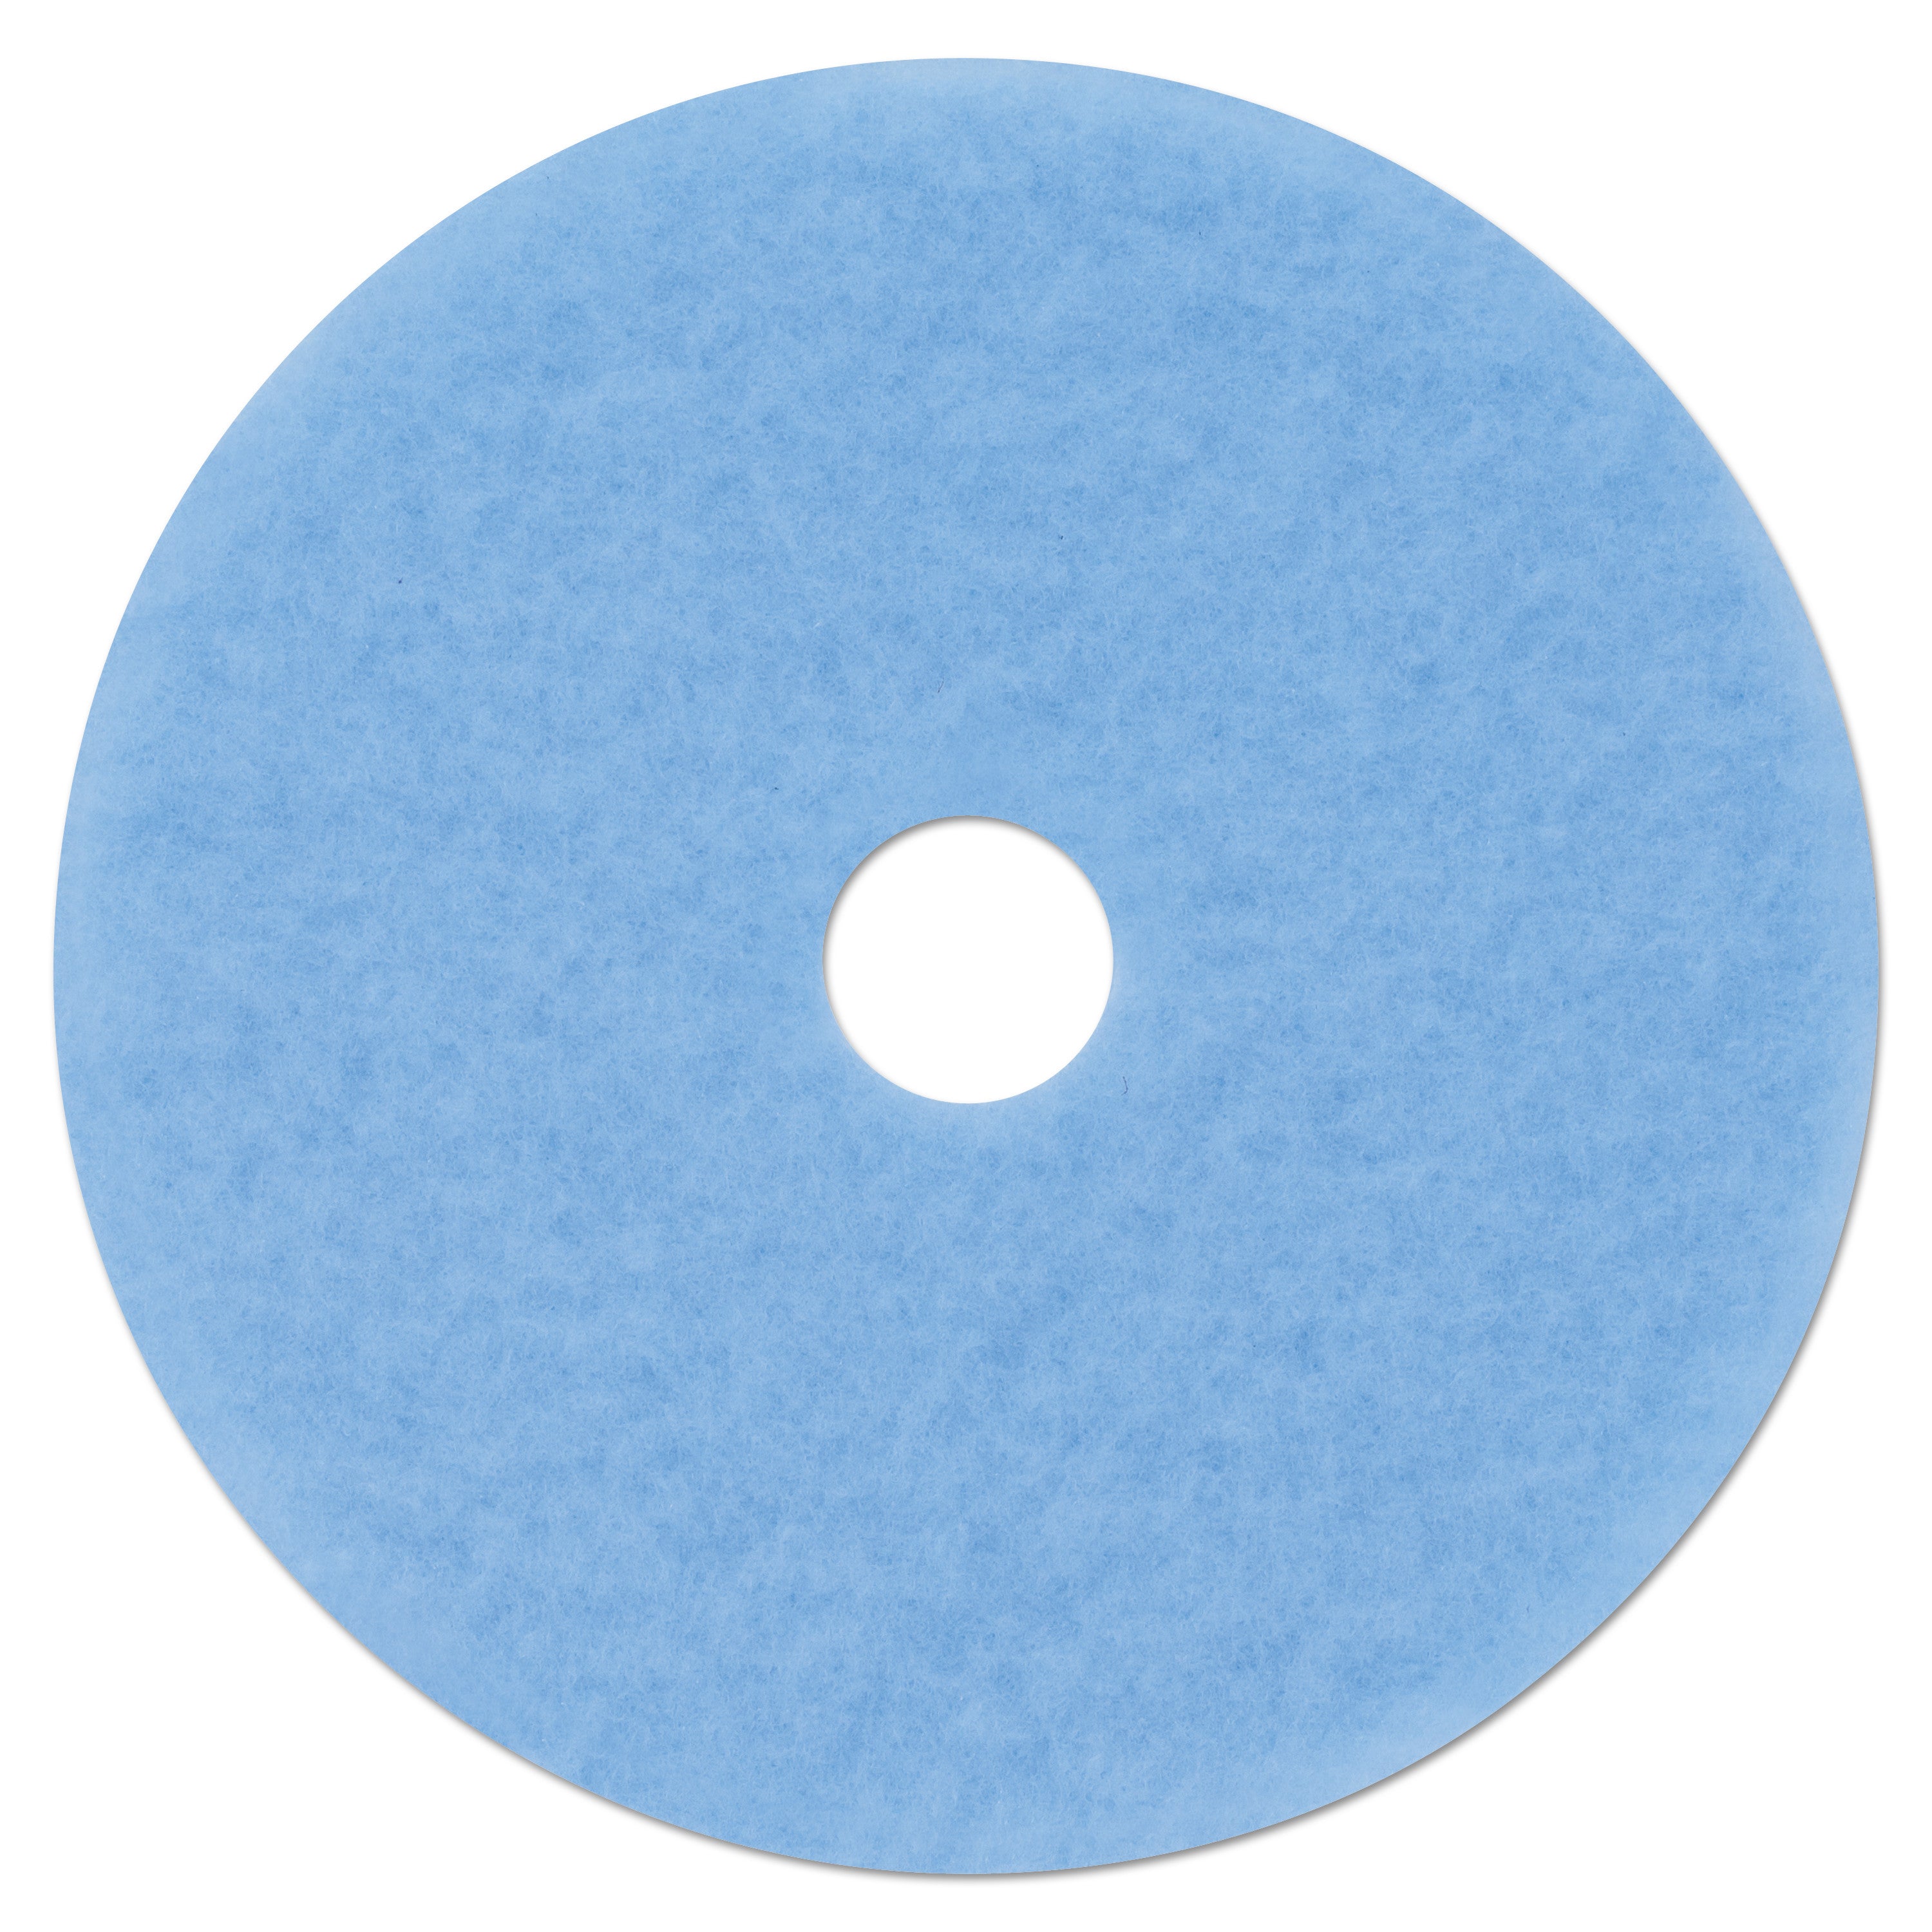 hi-performance-burnish-pad-3050-21-diameter-sky-blue-5-carton_mmm59829 - 1